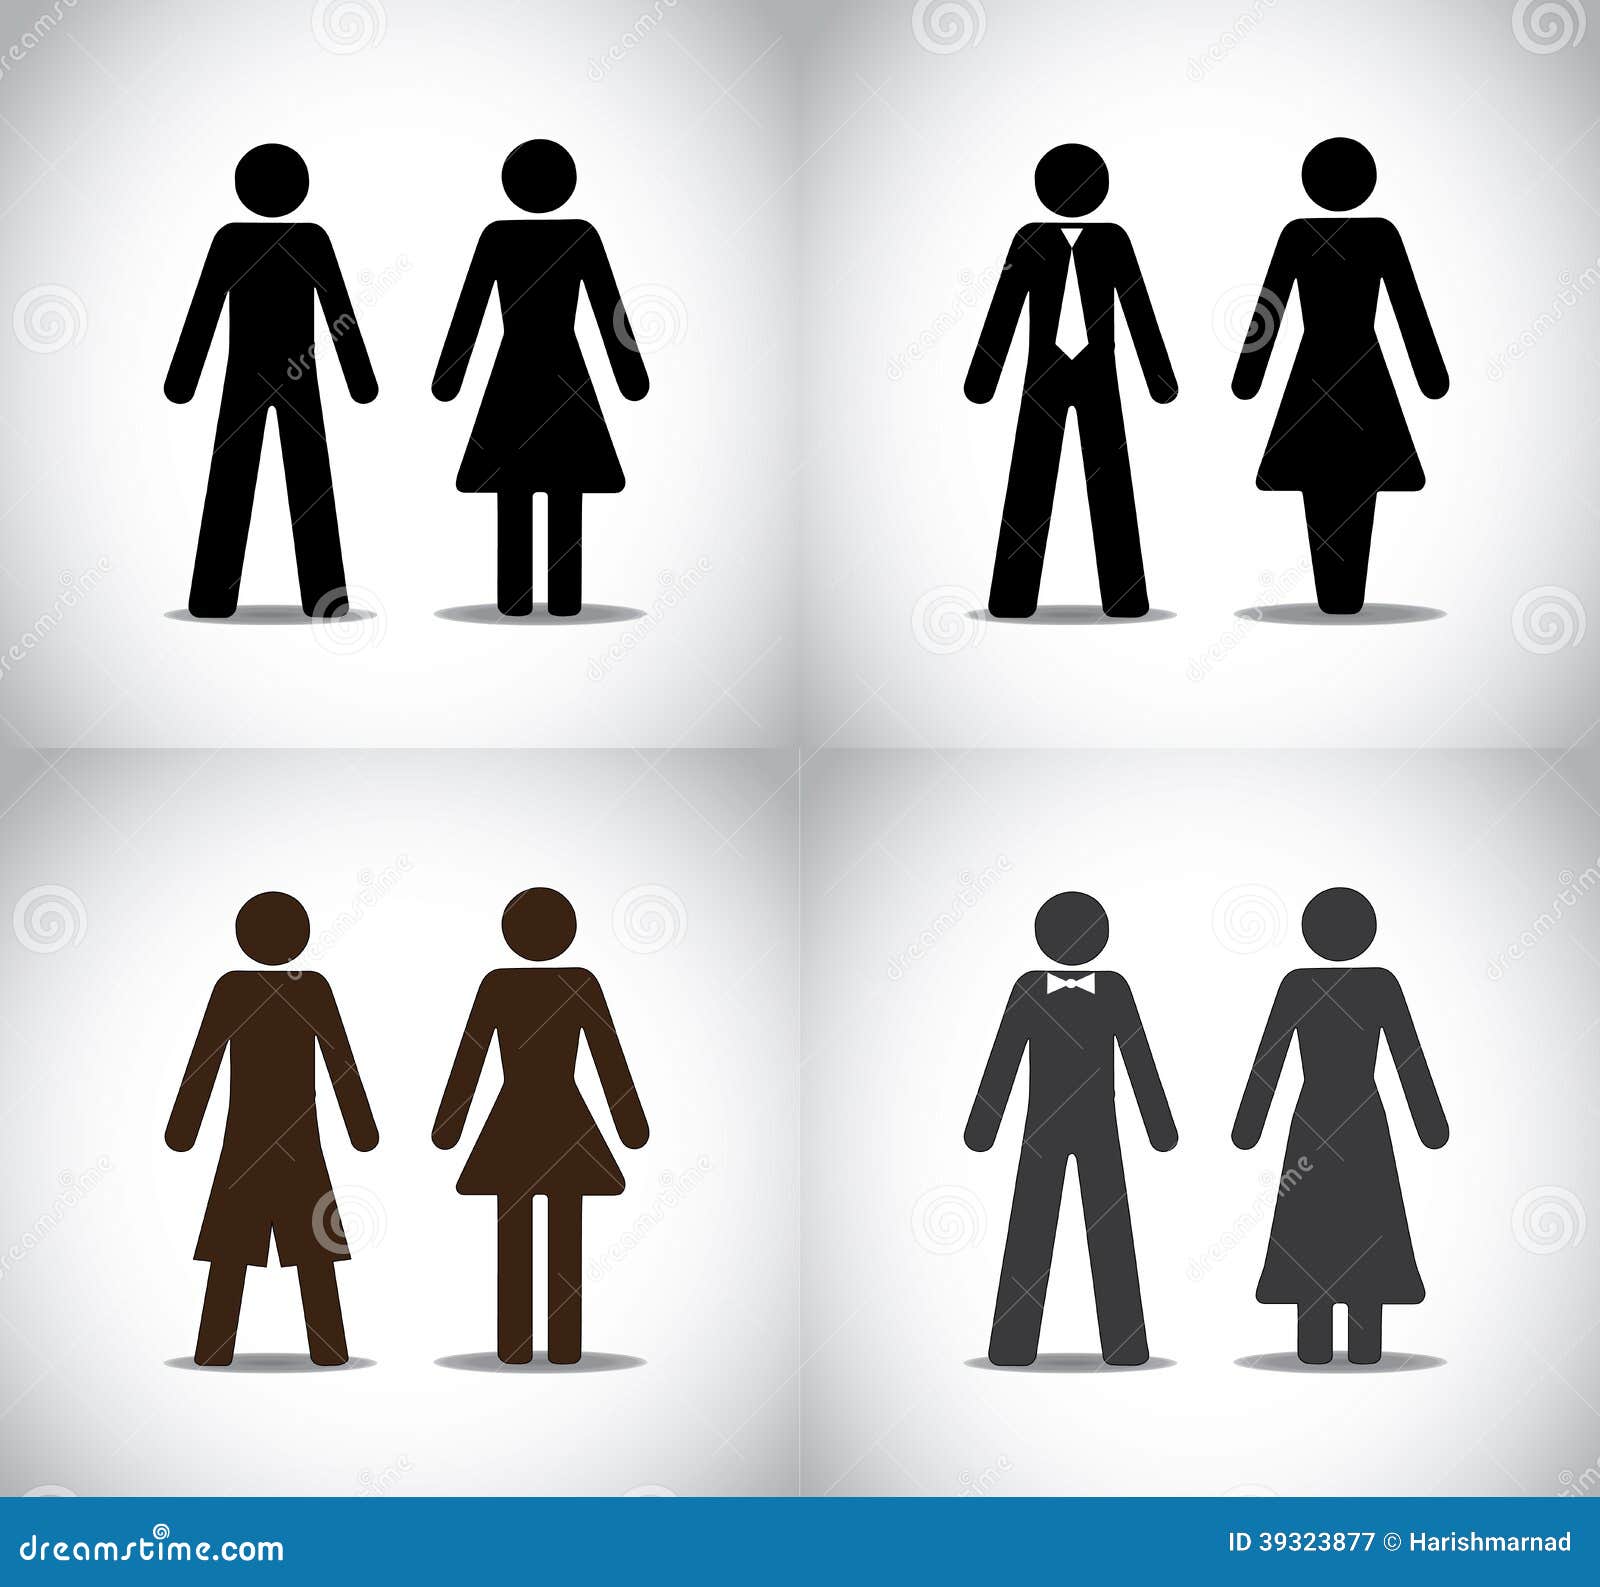 Man Woman Or Boy Girl Standing Symbols Concept Stock Vector ... Man And Woman Bathroom Symbol